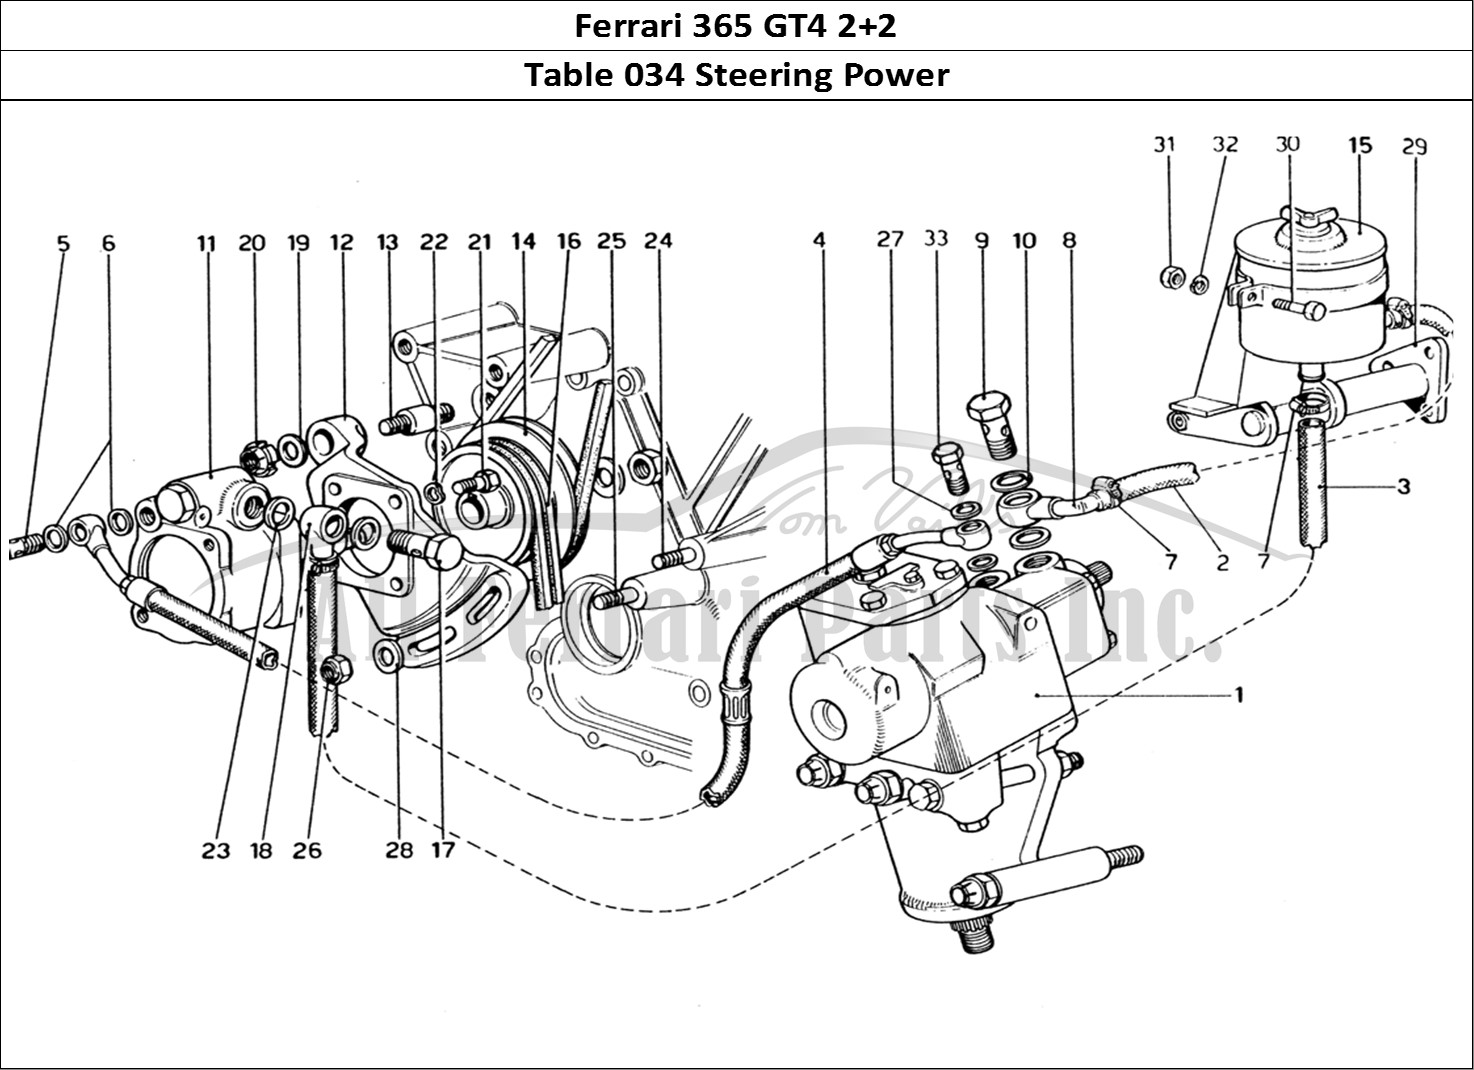 Ferrari Parts Ferrari 365 GT4 2+2 (1973) Page 034 Power Steering